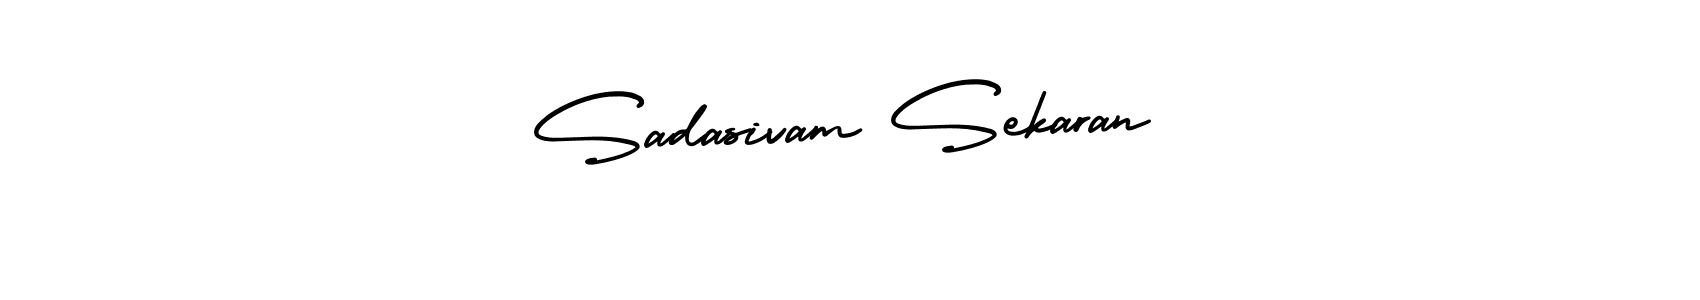 How to Draw Sadasivam Sekaran signature style? AmerikaSignatureDemo-Regular is a latest design signature styles for name Sadasivam Sekaran. Sadasivam Sekaran signature style 3 images and pictures png